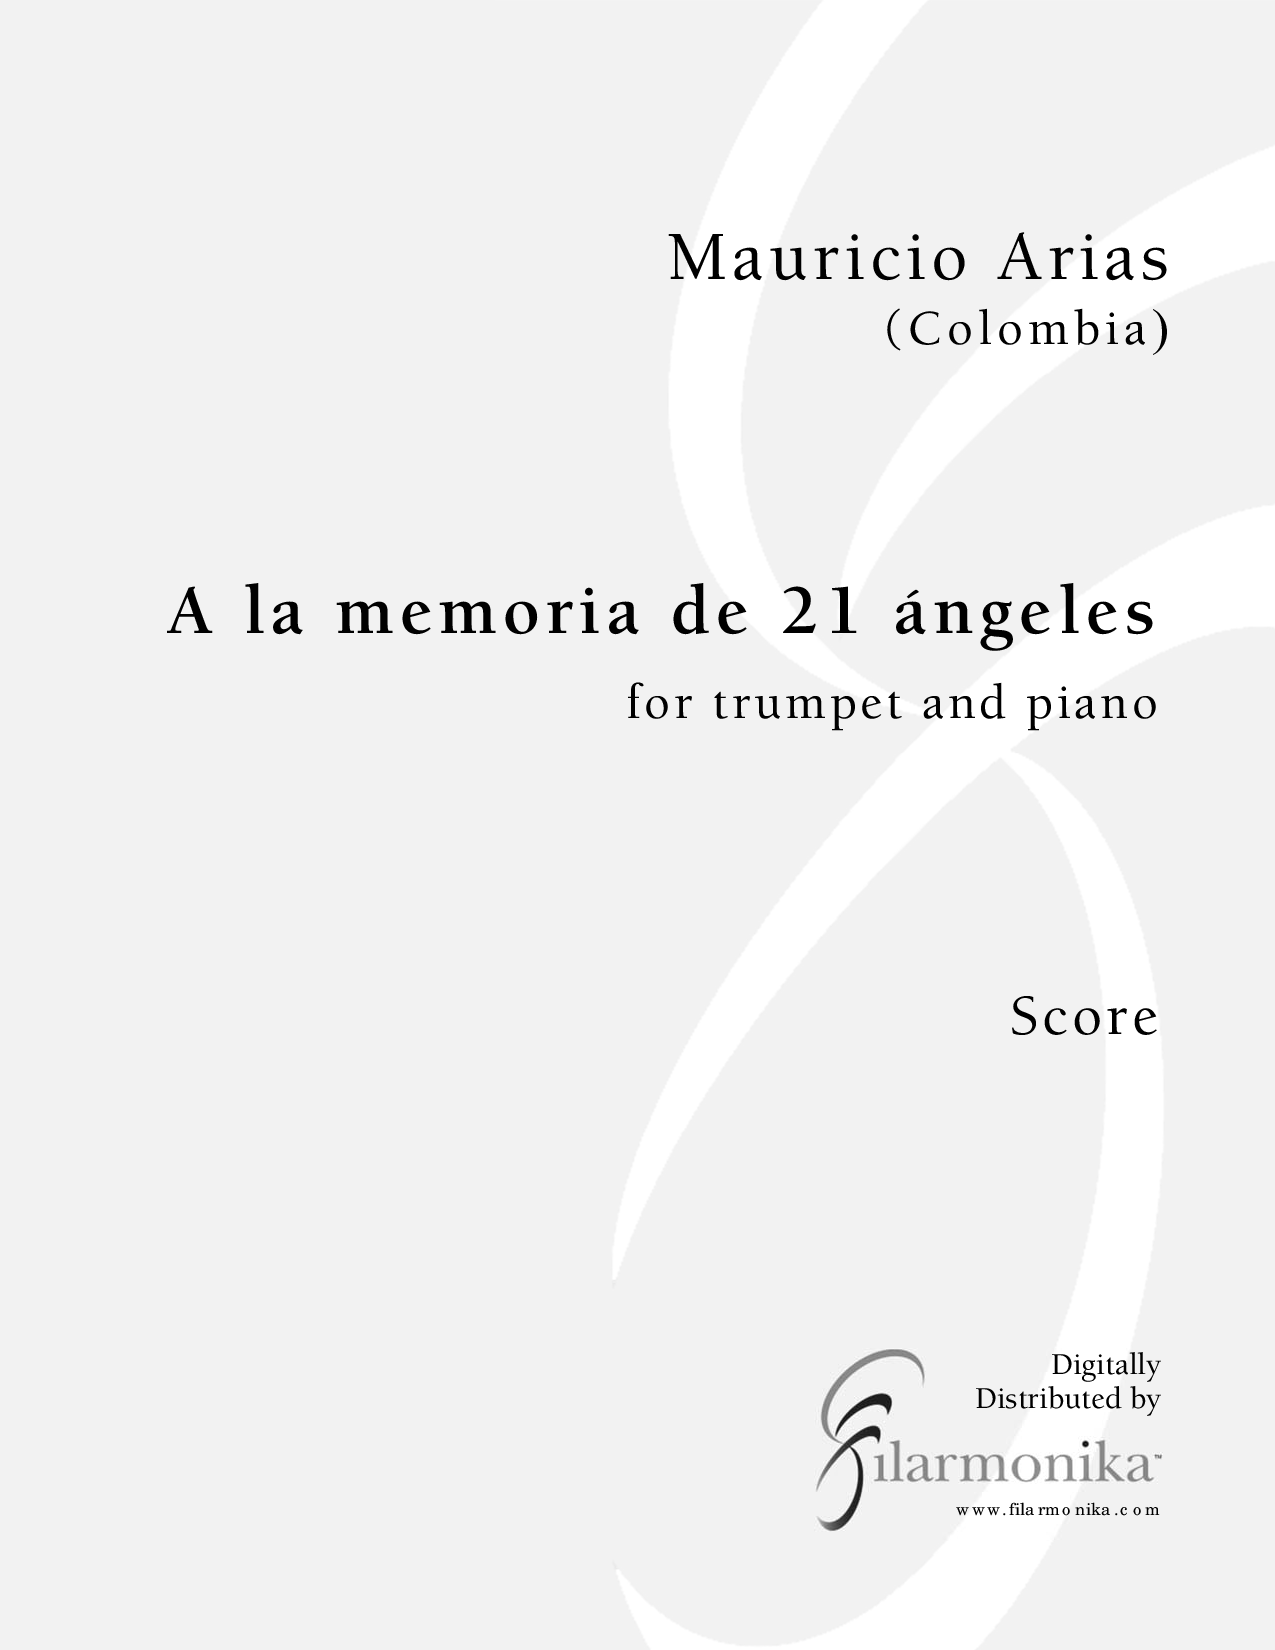 A la memoria de 21 ángeles, for trumpet and piano